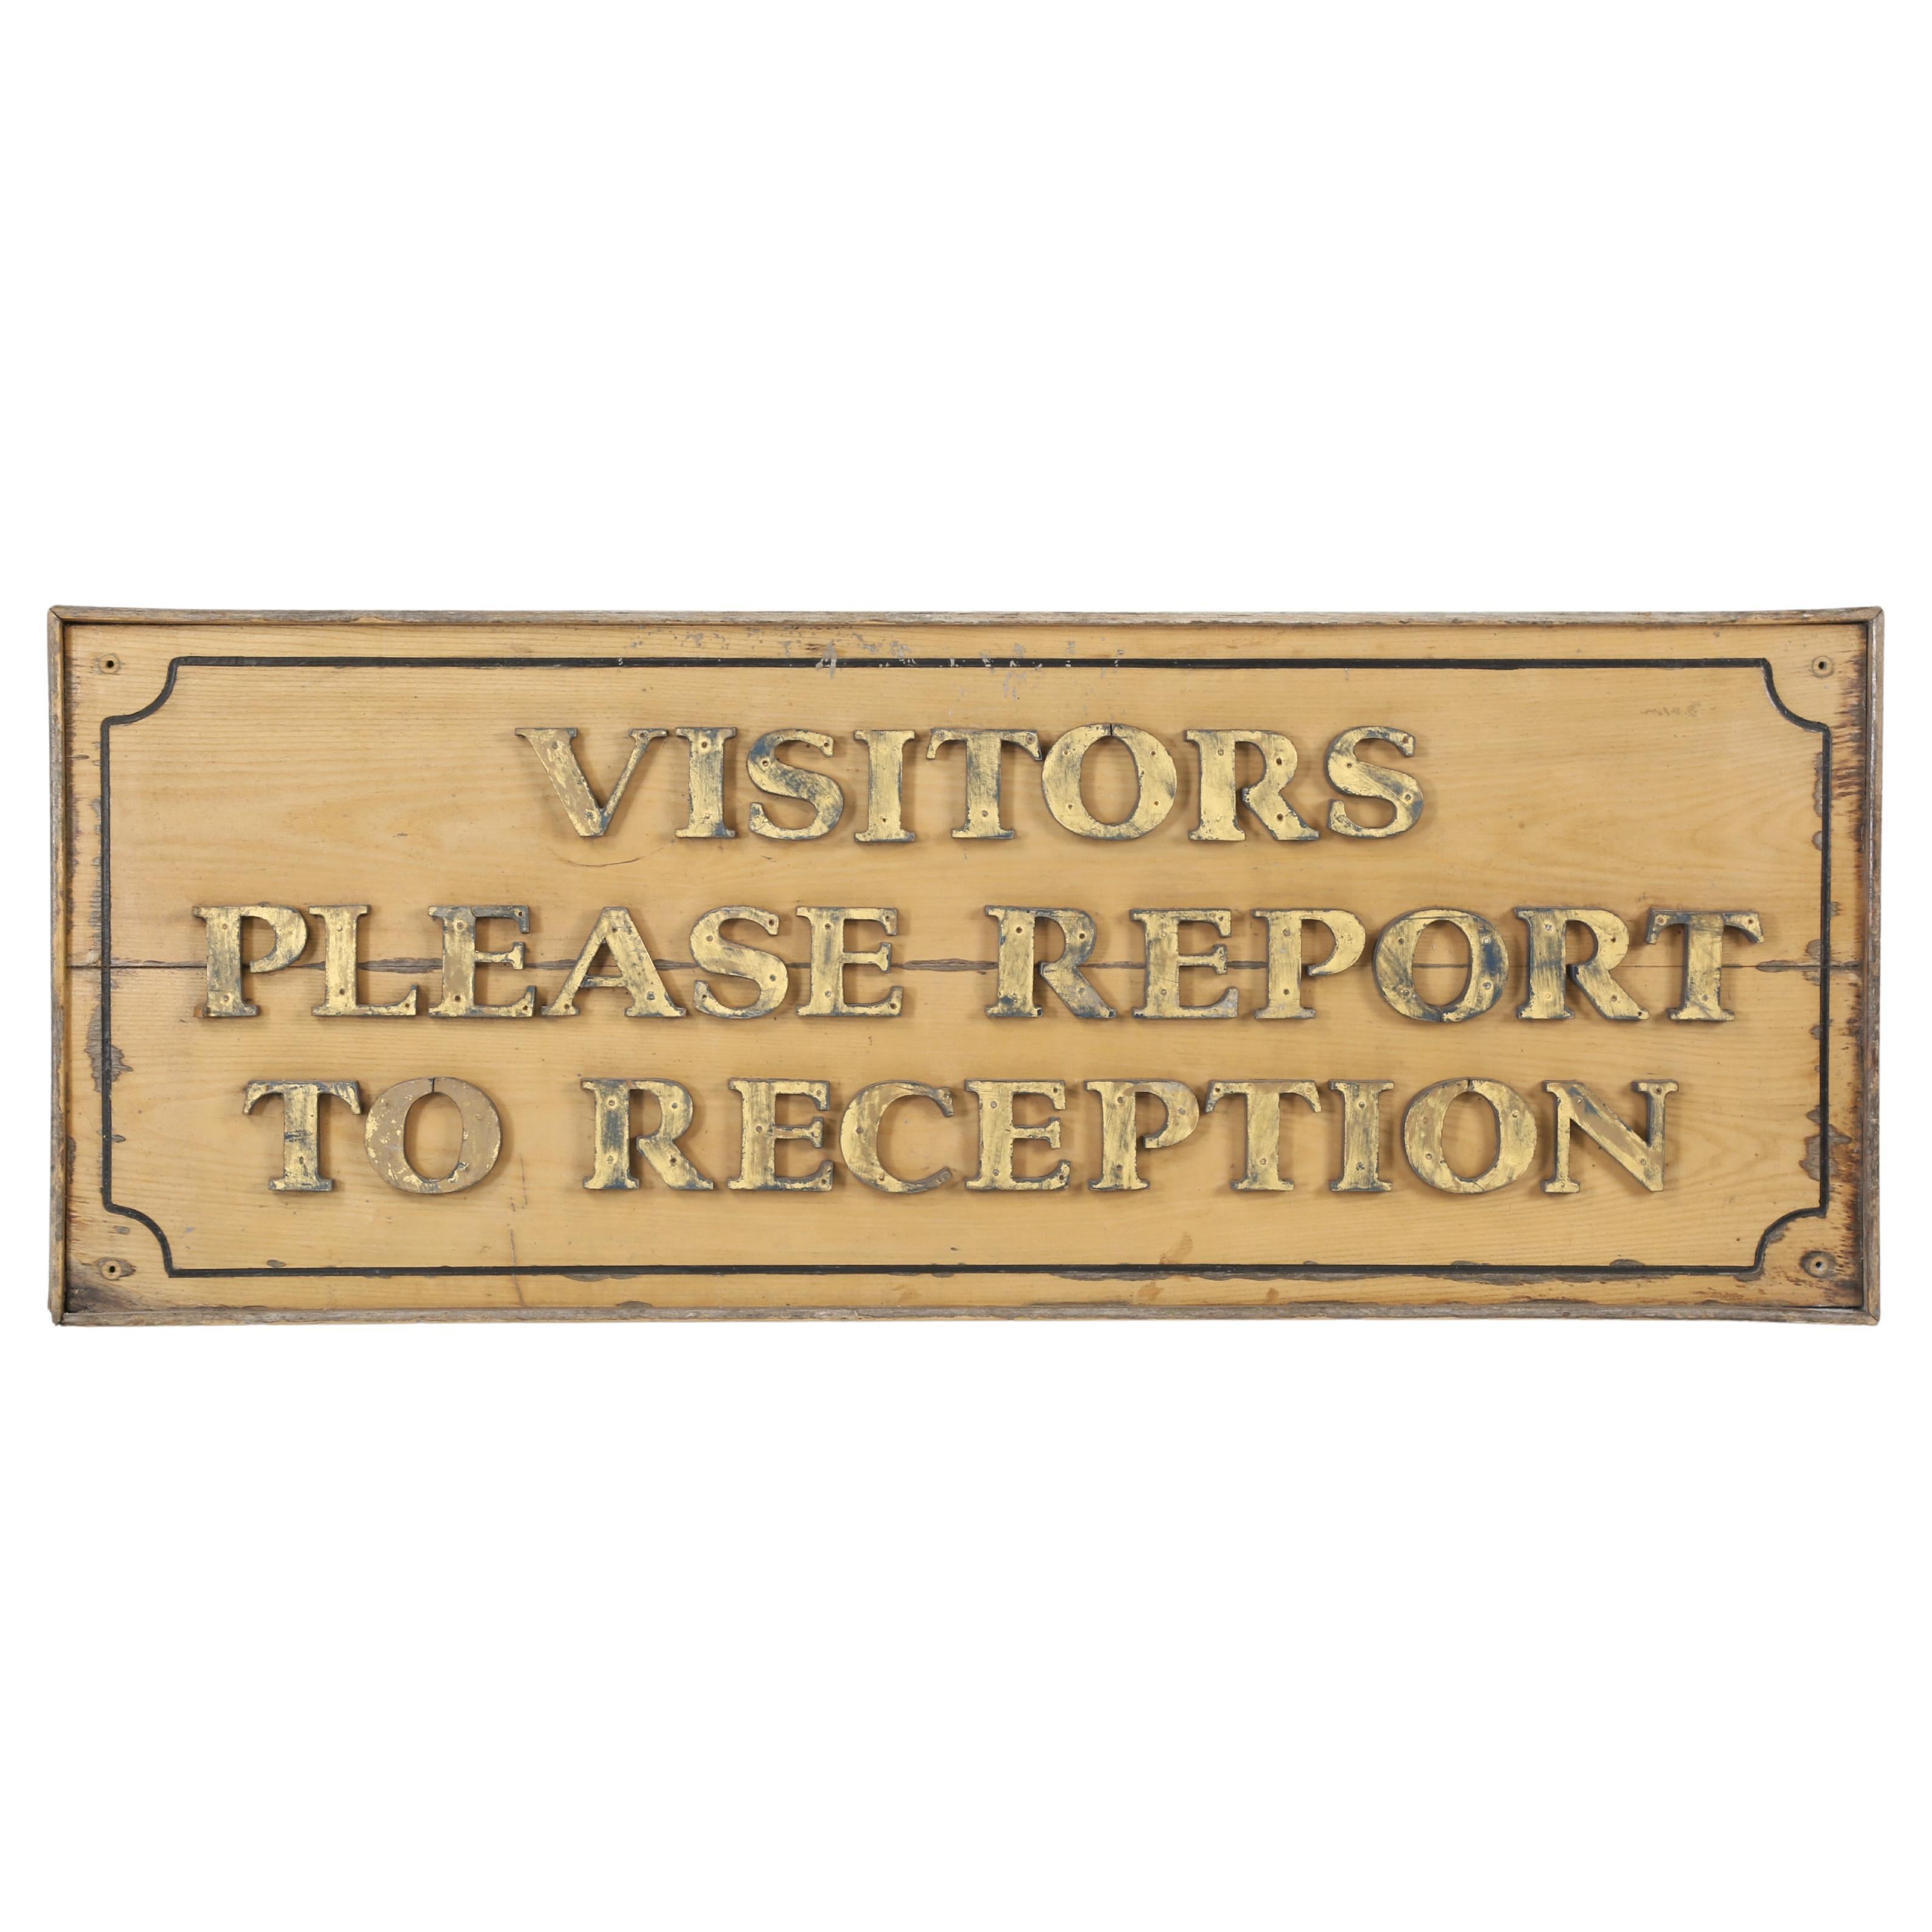 Visitors Please Report To Reception, Antique Sign Original Unrestored Condition For Sale